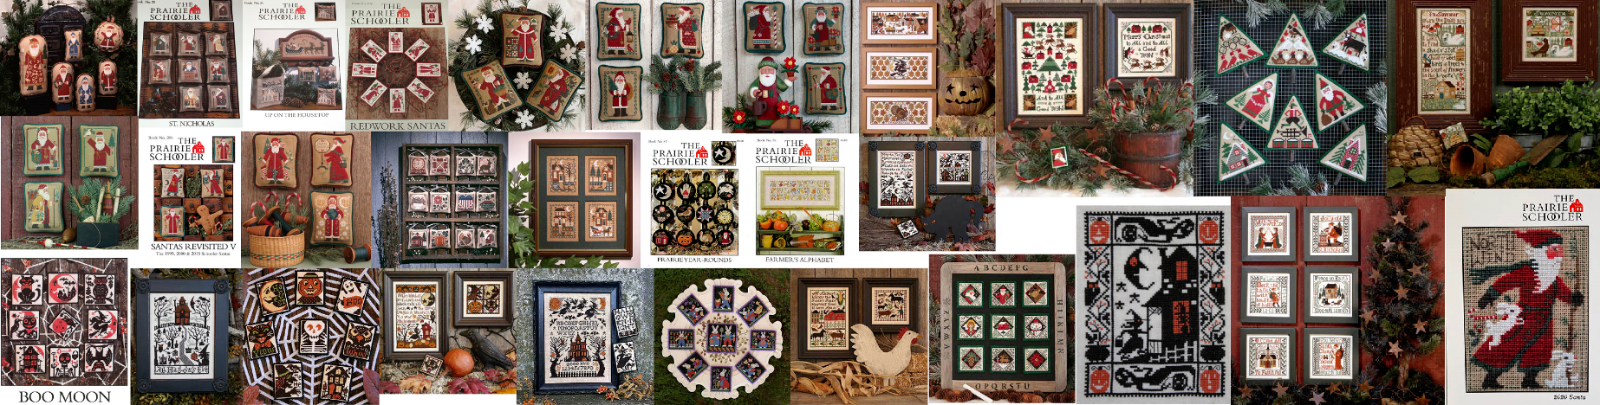 Prairie Schooler Counted Cross Stitch Patterns You Choose Santas Halloween